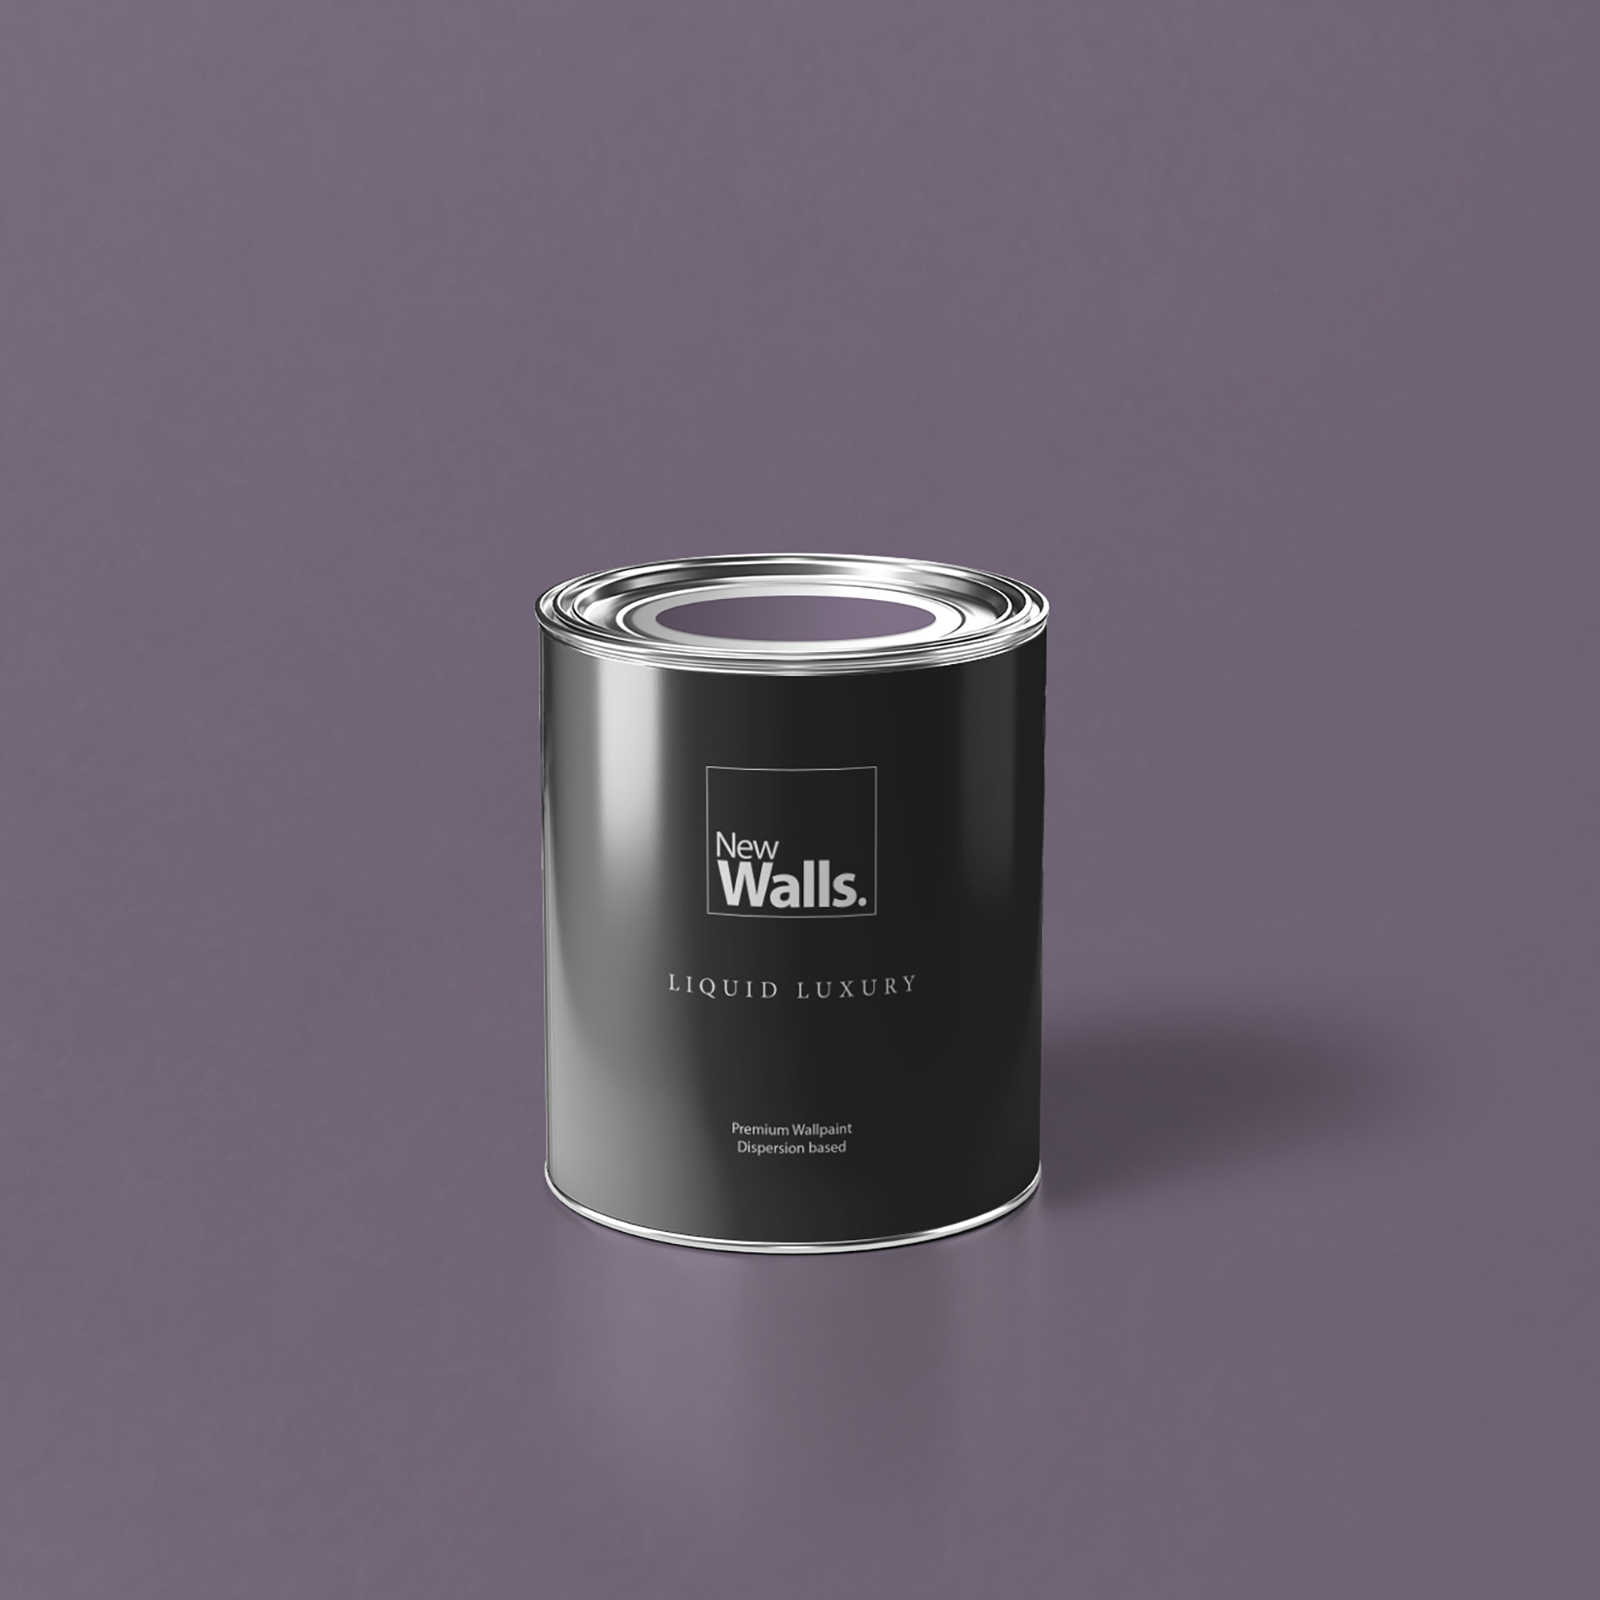         Premium Wandfarbe liebliches Dunkellila »Magical Mauve« NW202 – 1 Liter
    